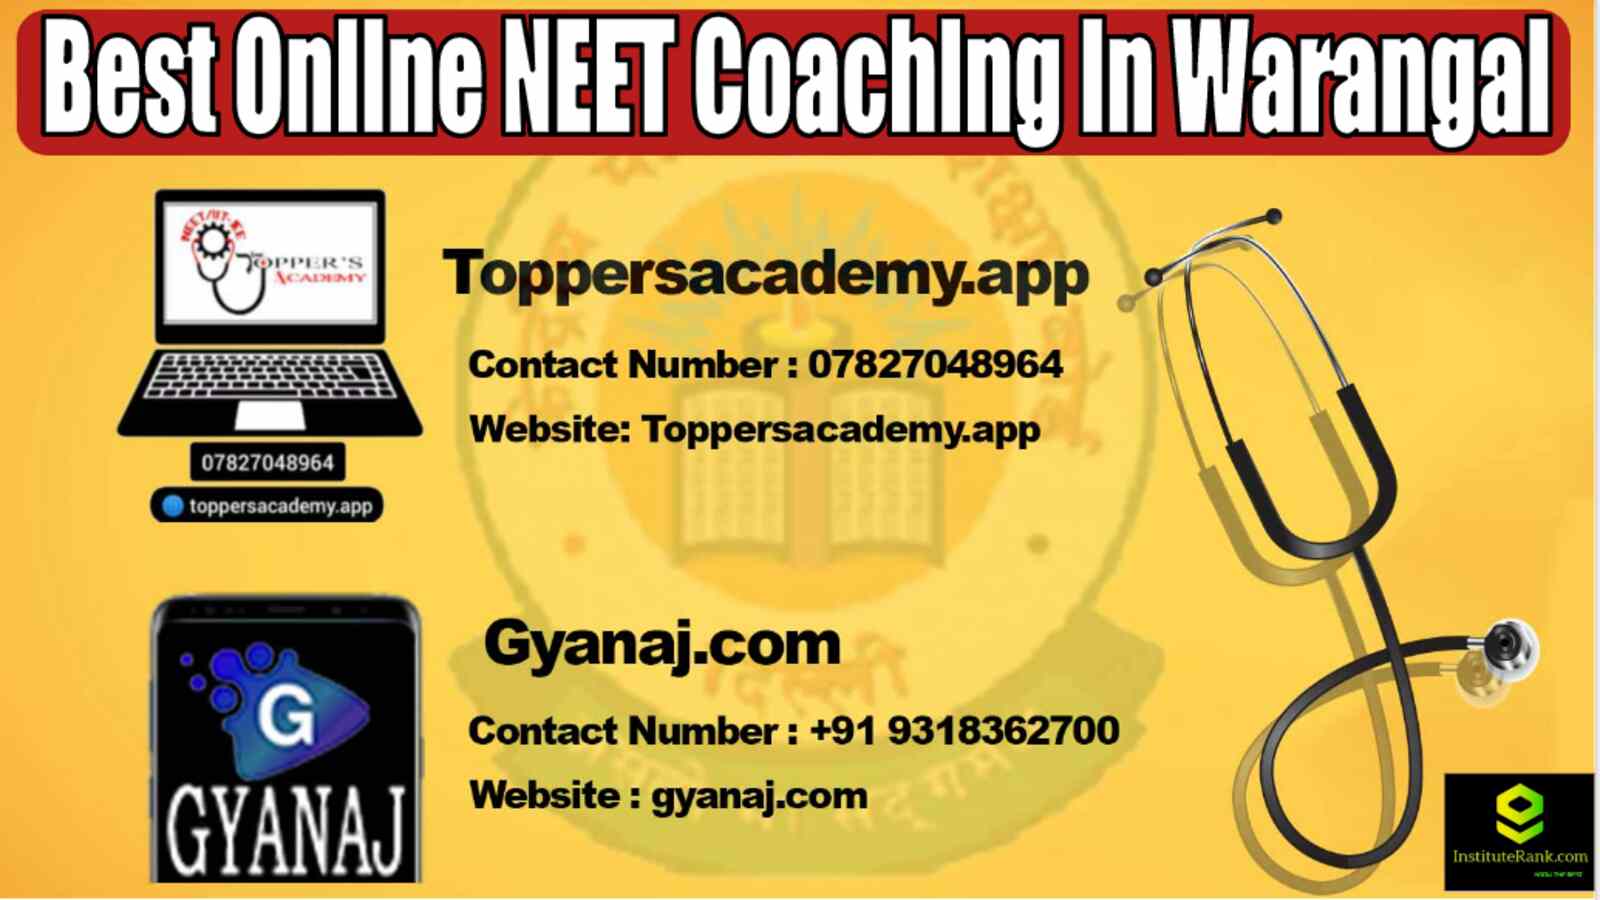 Best Online NEET Coaching in Warangal 2022